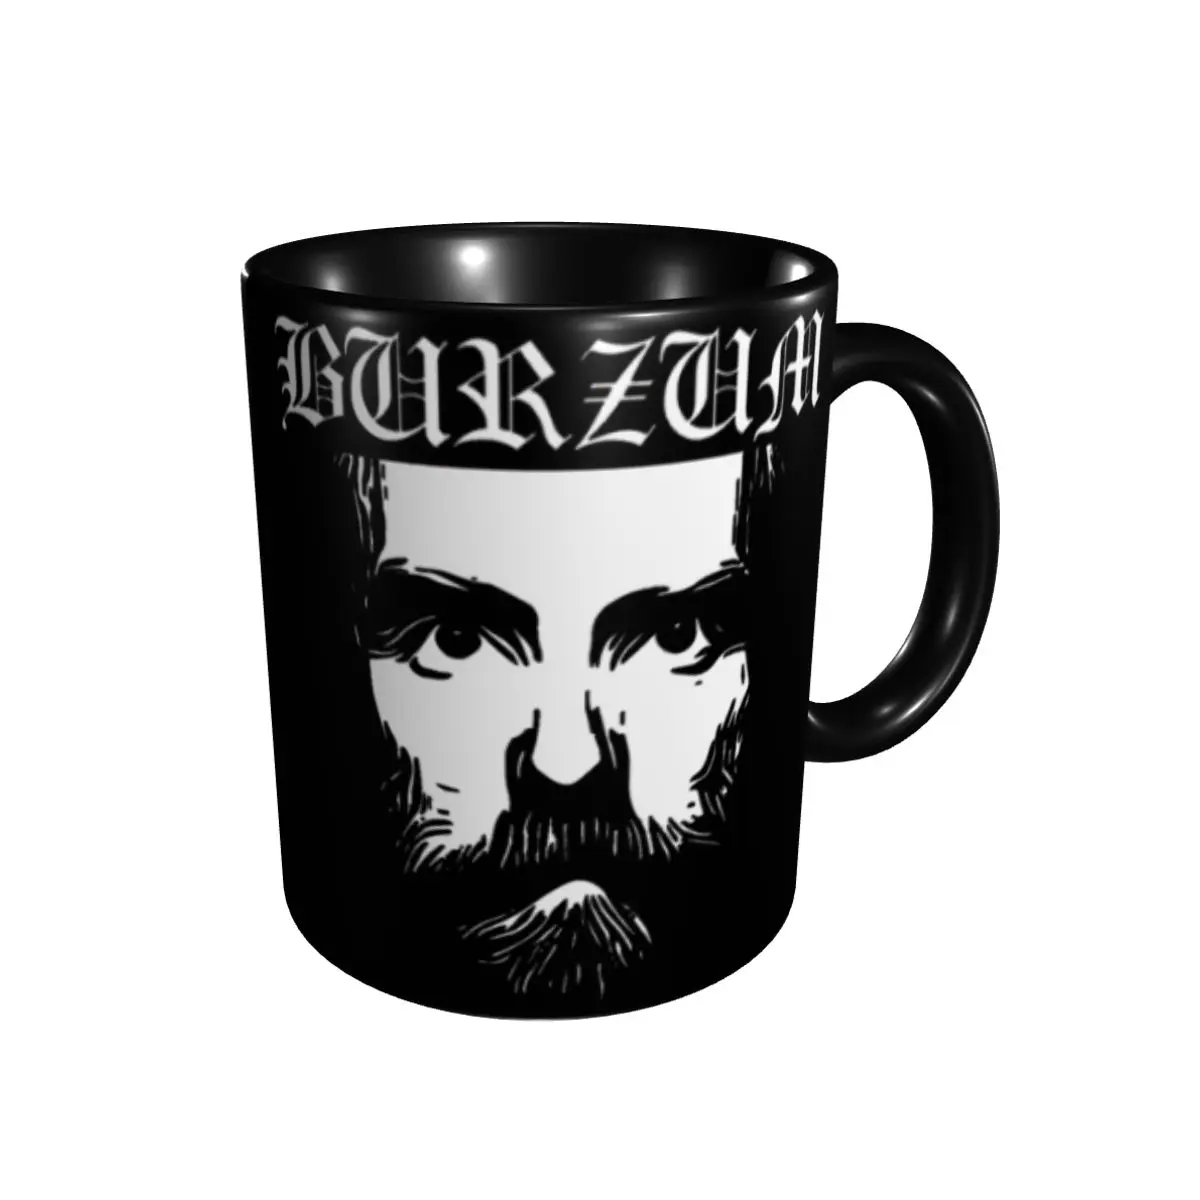 

Promo Burzum Varg Vikernes Burzum(1) Mugs Funny Cups Mugs Print Humor Graphic R191 milk cups